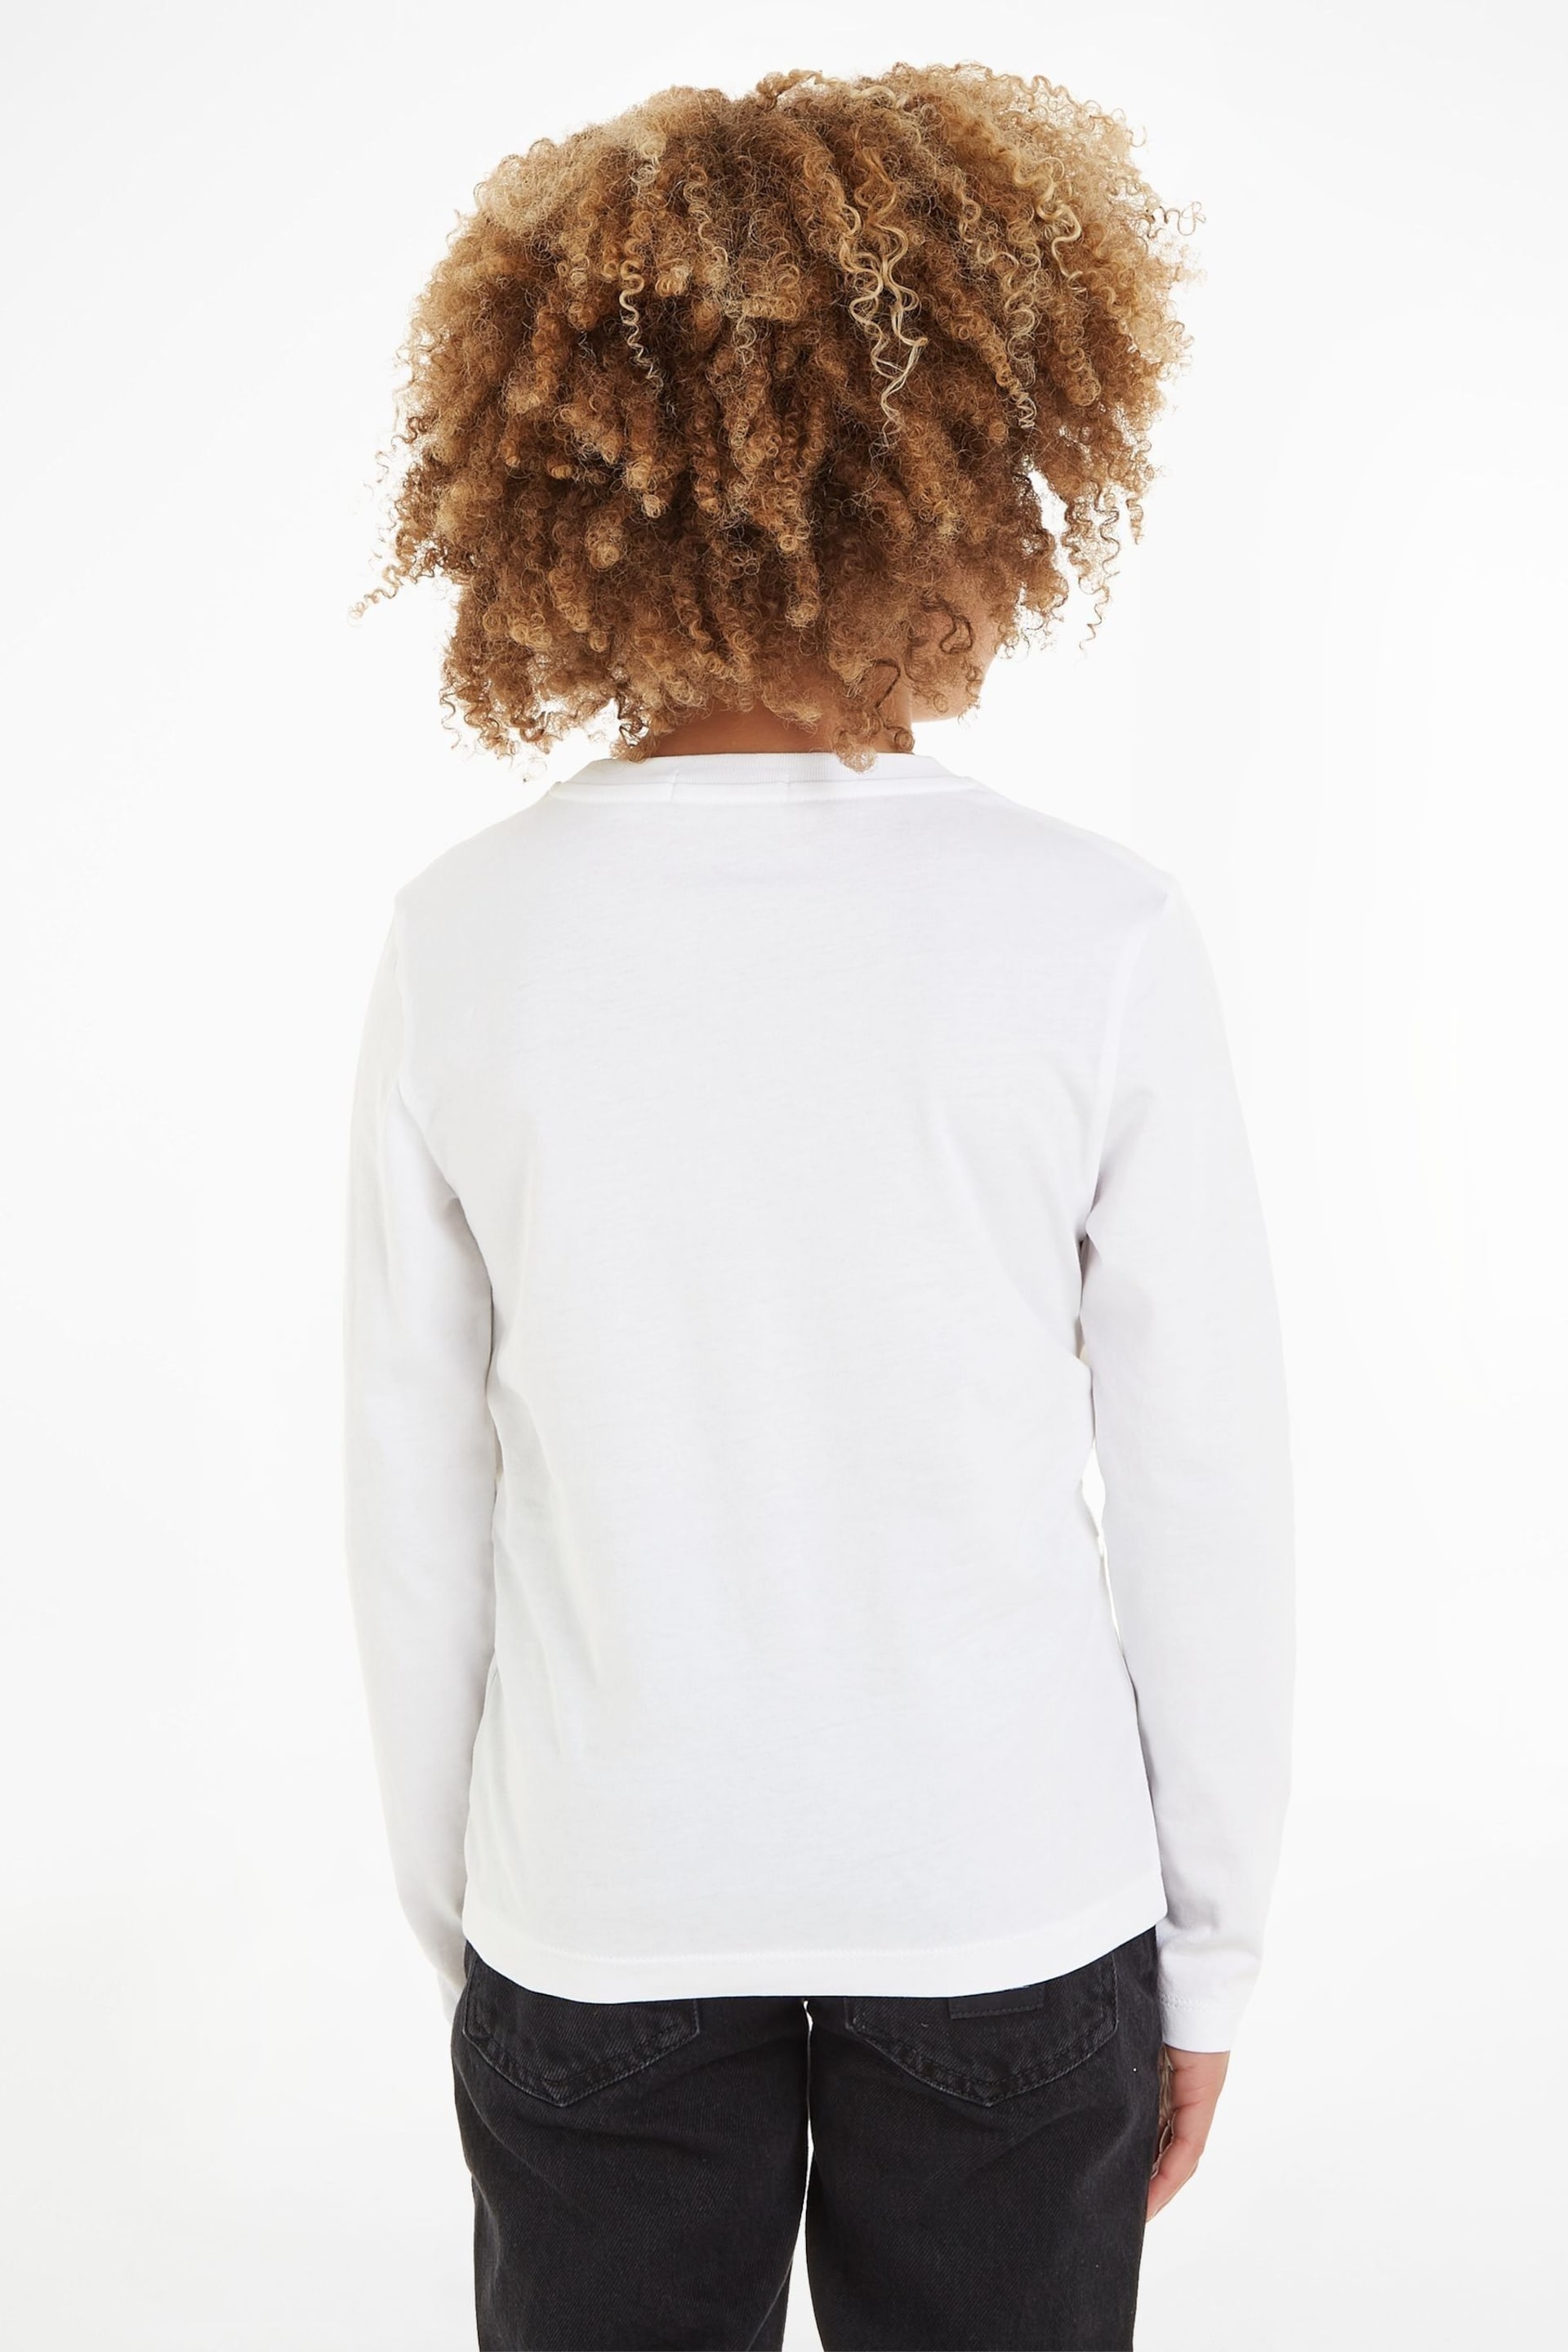 Calvin Klein Jeans White Monogram Long Sleeve Top - Image 2 of 6